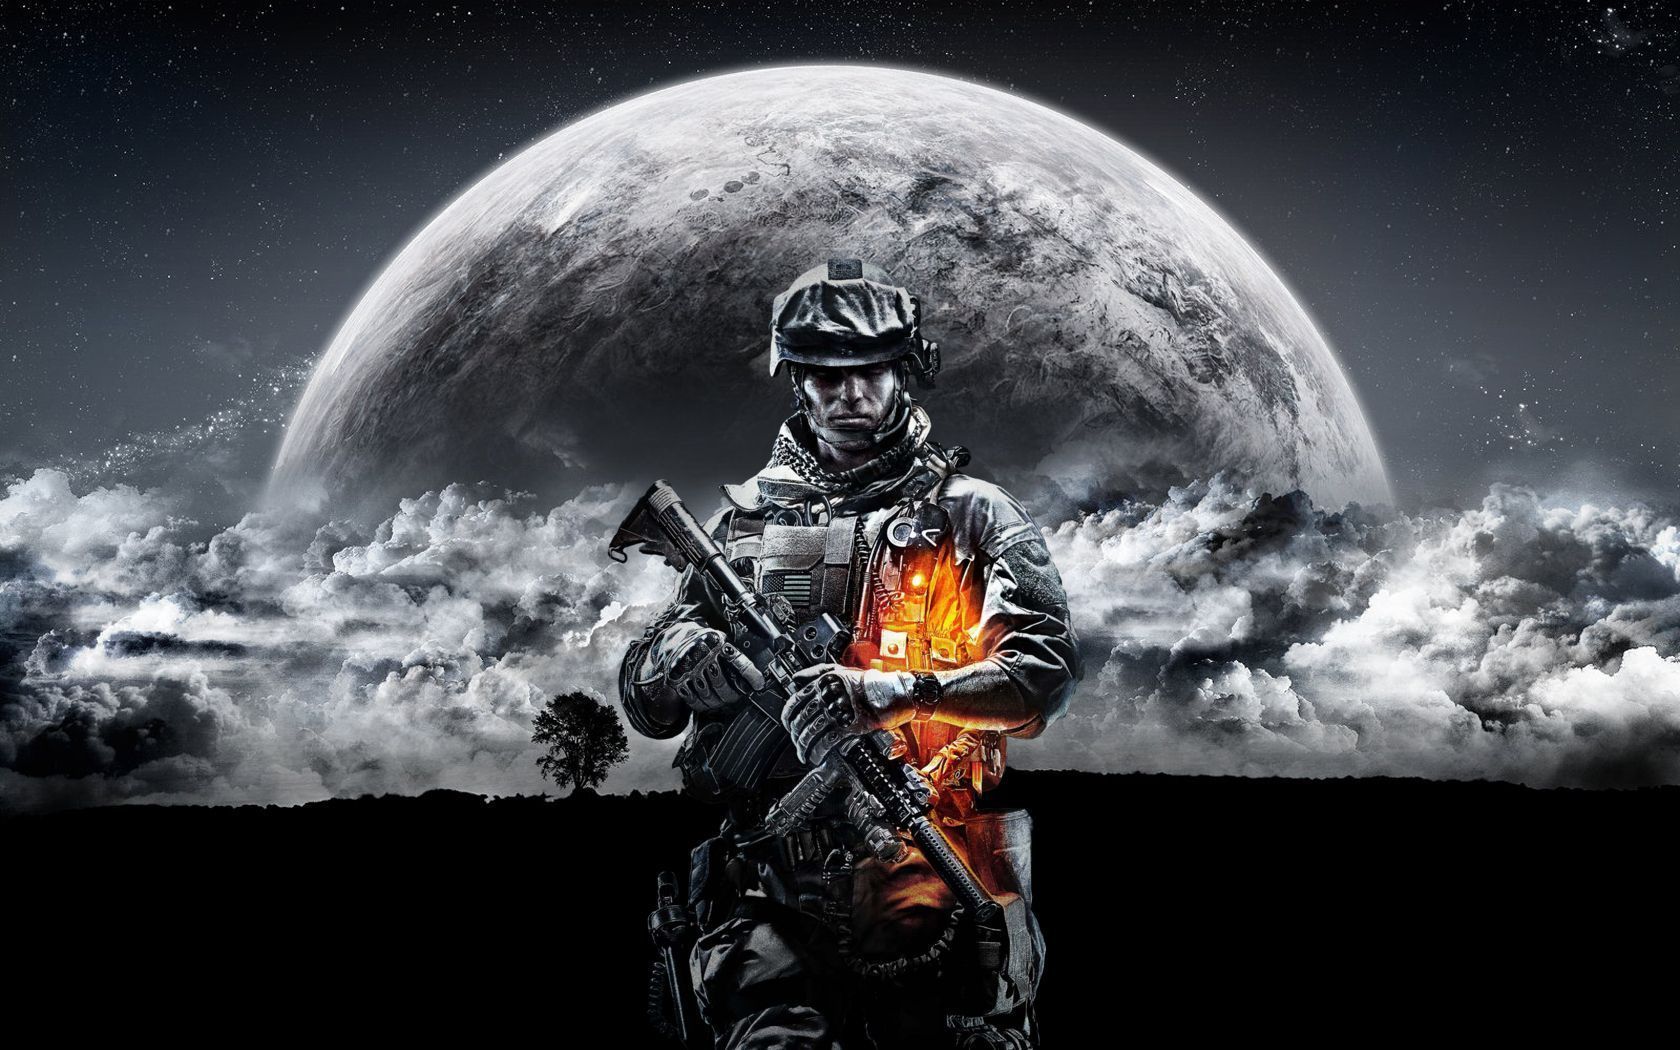 Battlefield 3 Wallpaper - HD Images New